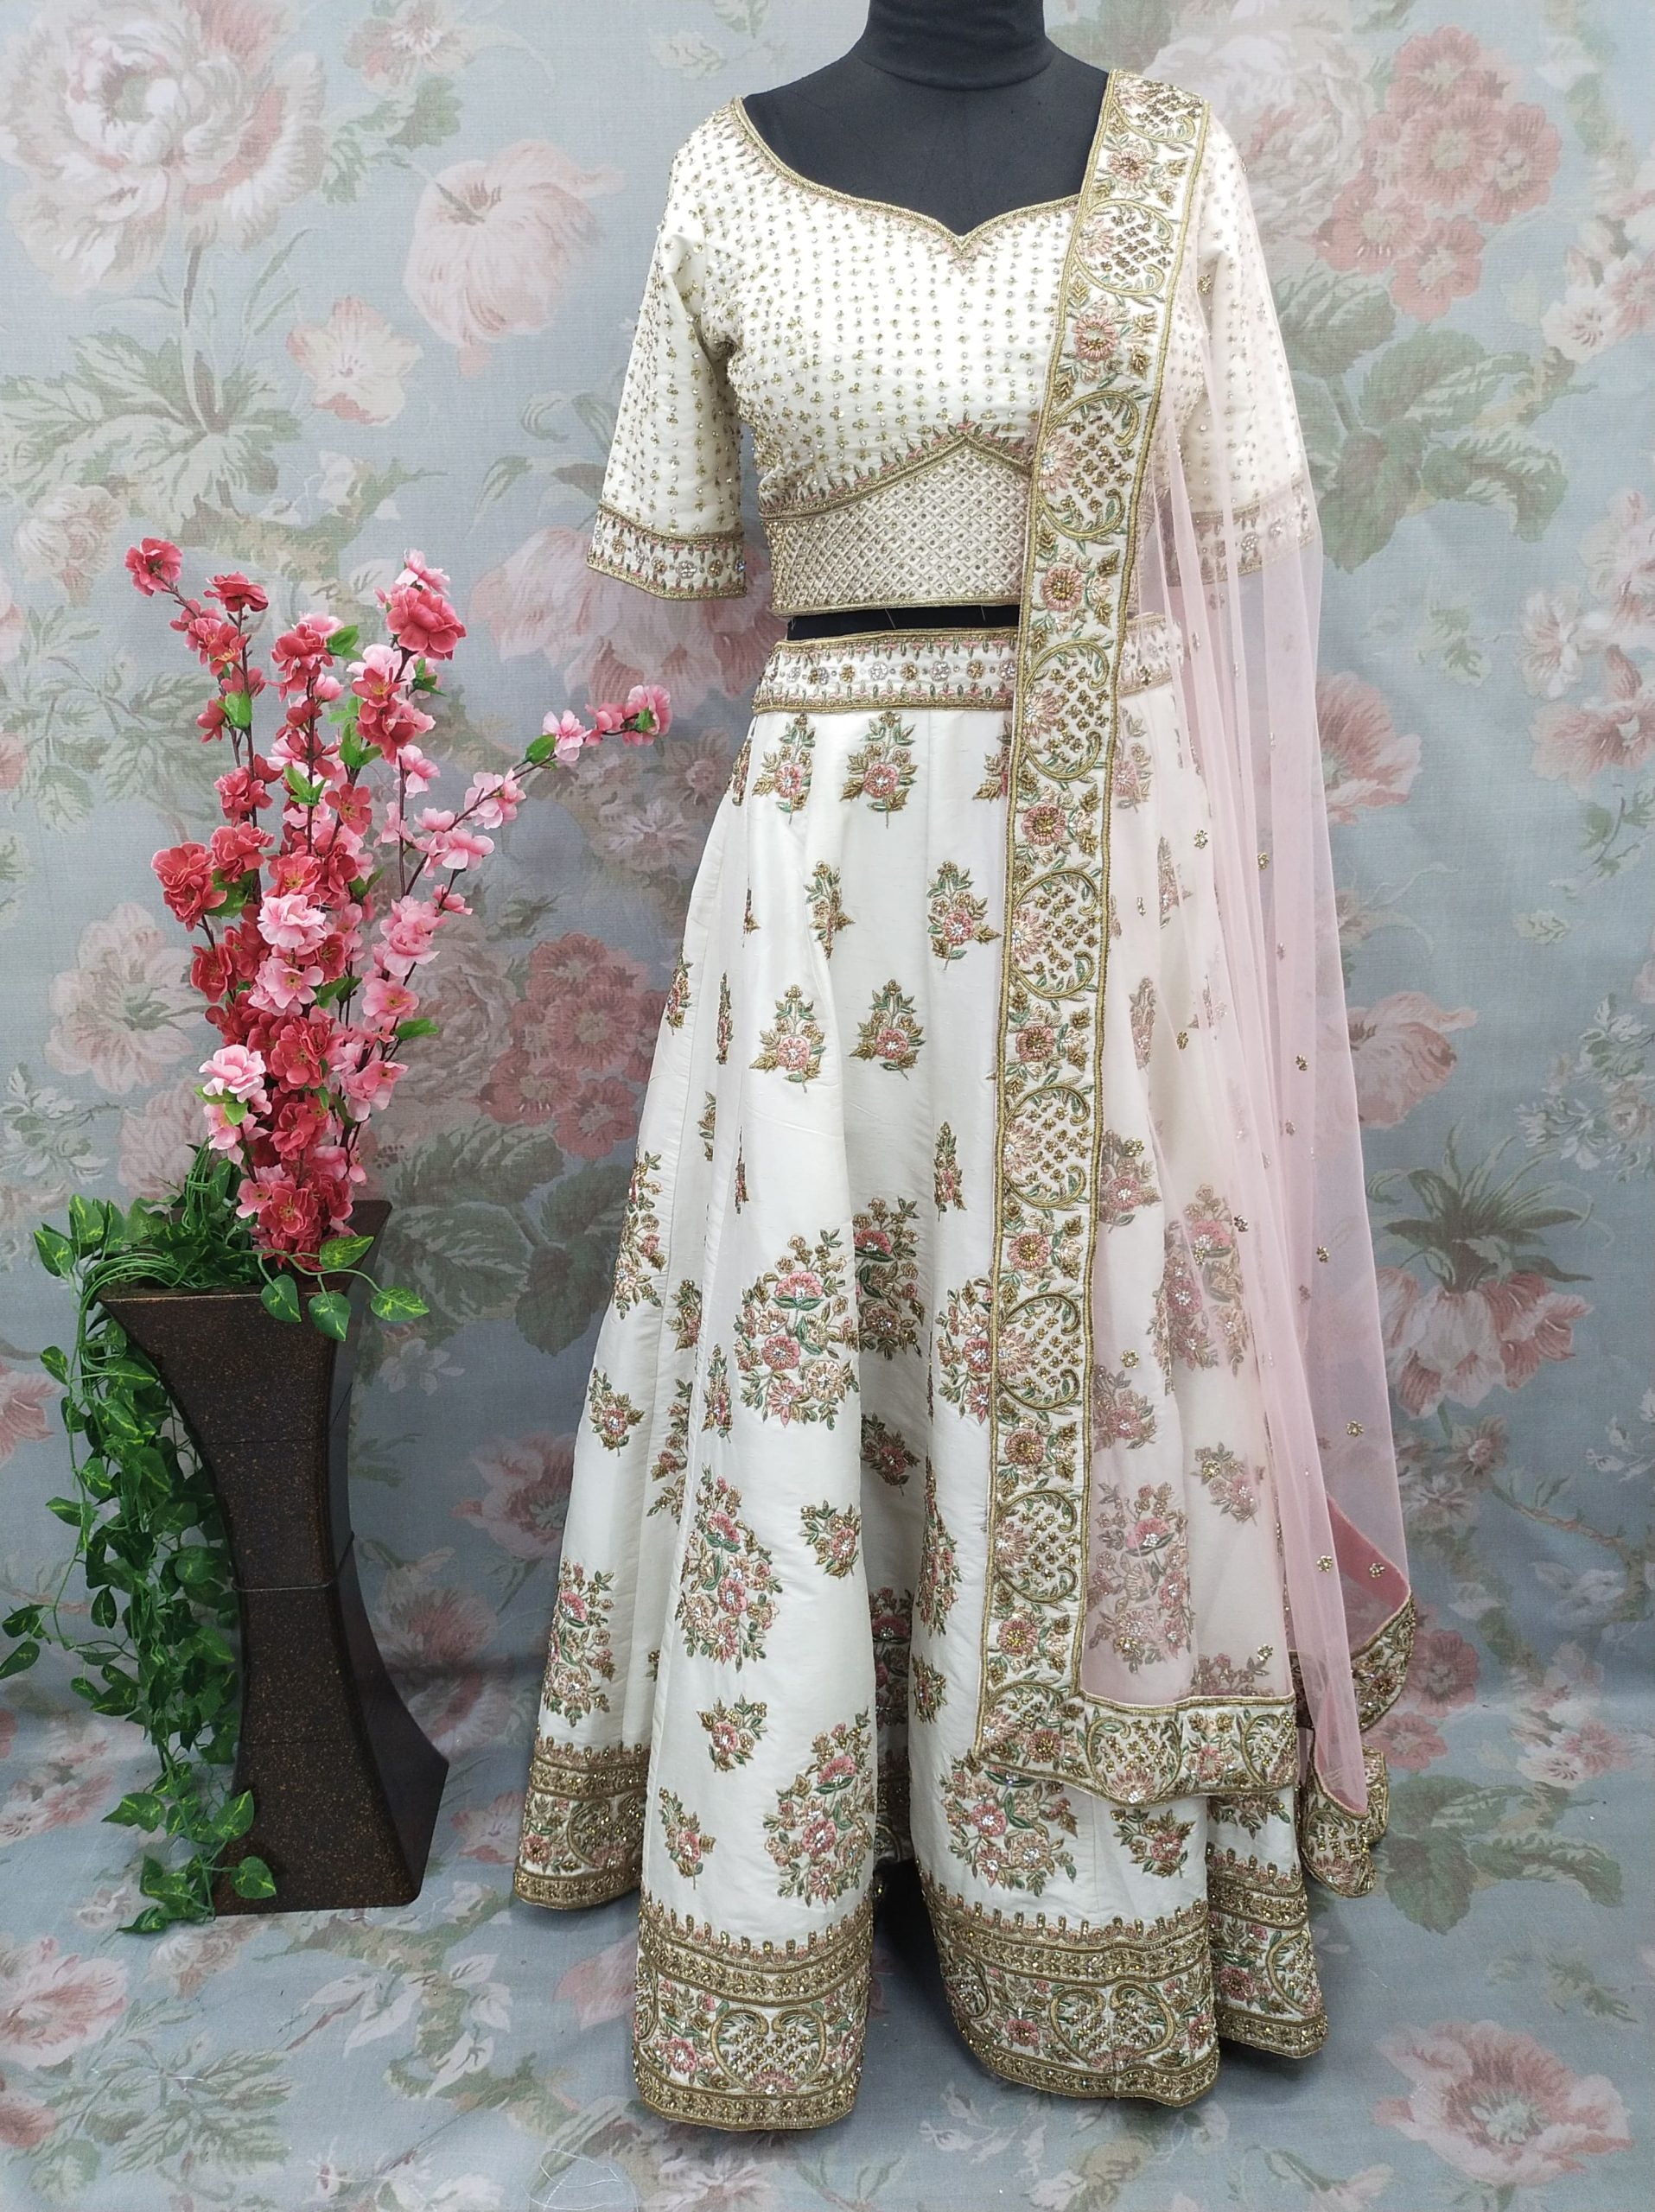 Off-White Bridal Lehenga Choli - Premium Bridal lehenga from Dulhan Exclusives - Just $2750! Shop now at Dulhan Exclusives